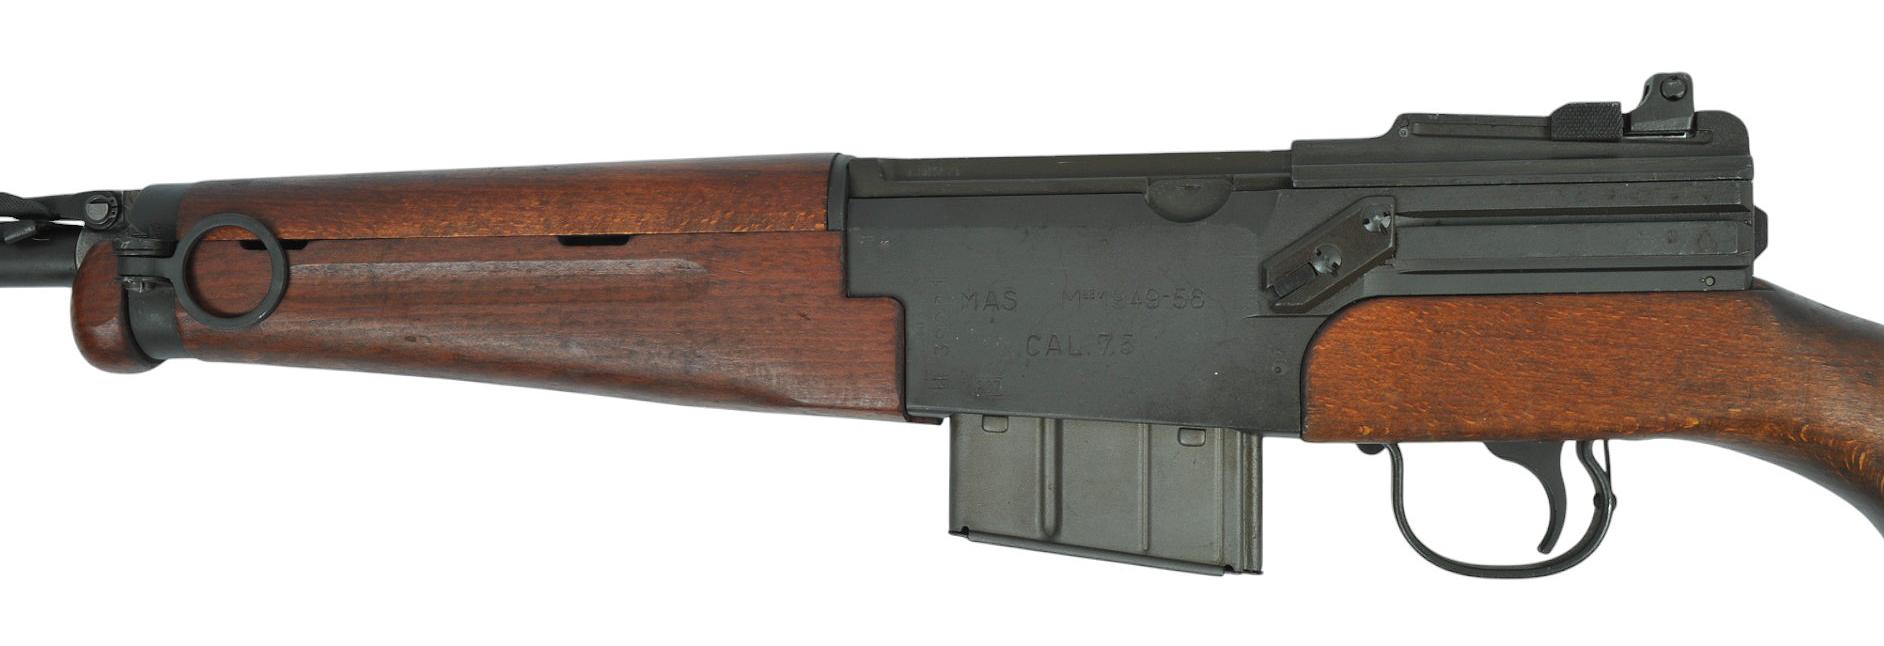 French Military MAS 1949-56 7.5x55mm Semi-Automatic Rifle - FFL # H39021 (K1S1)